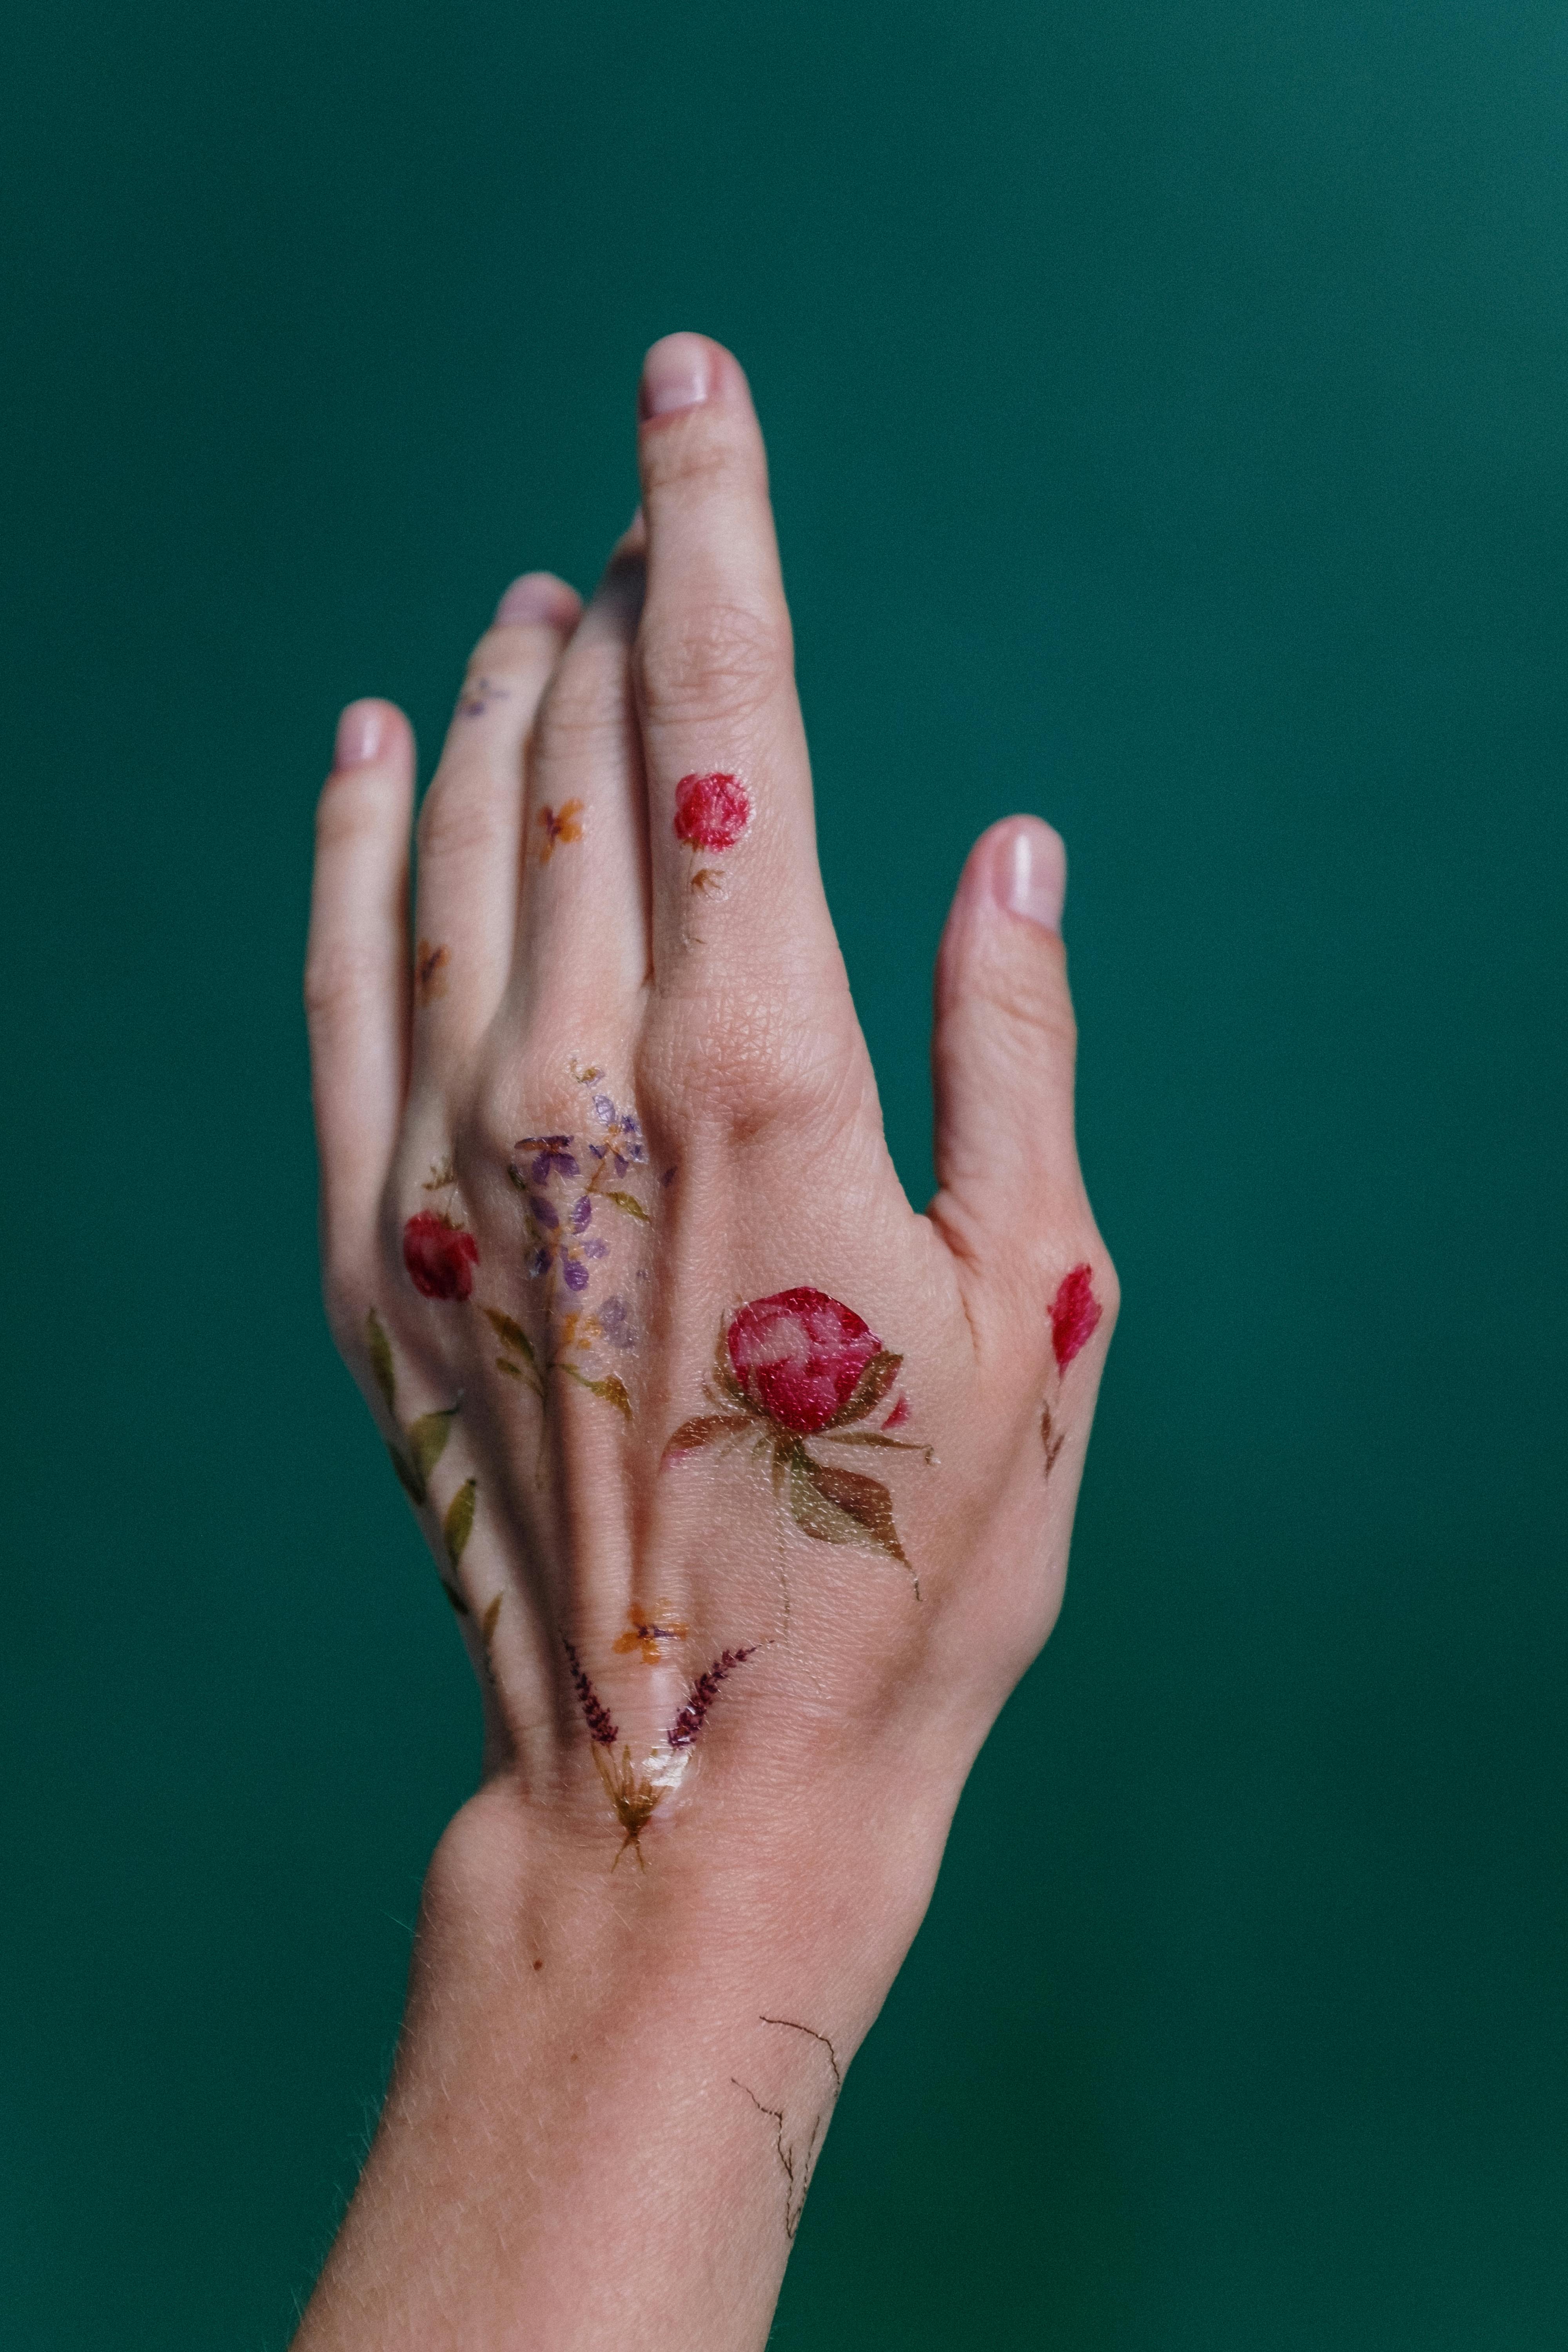 Daffodil and Marigold Small Tattoo | Finger tattoos, Hand and finger tattoos,  Flower finger tattoos